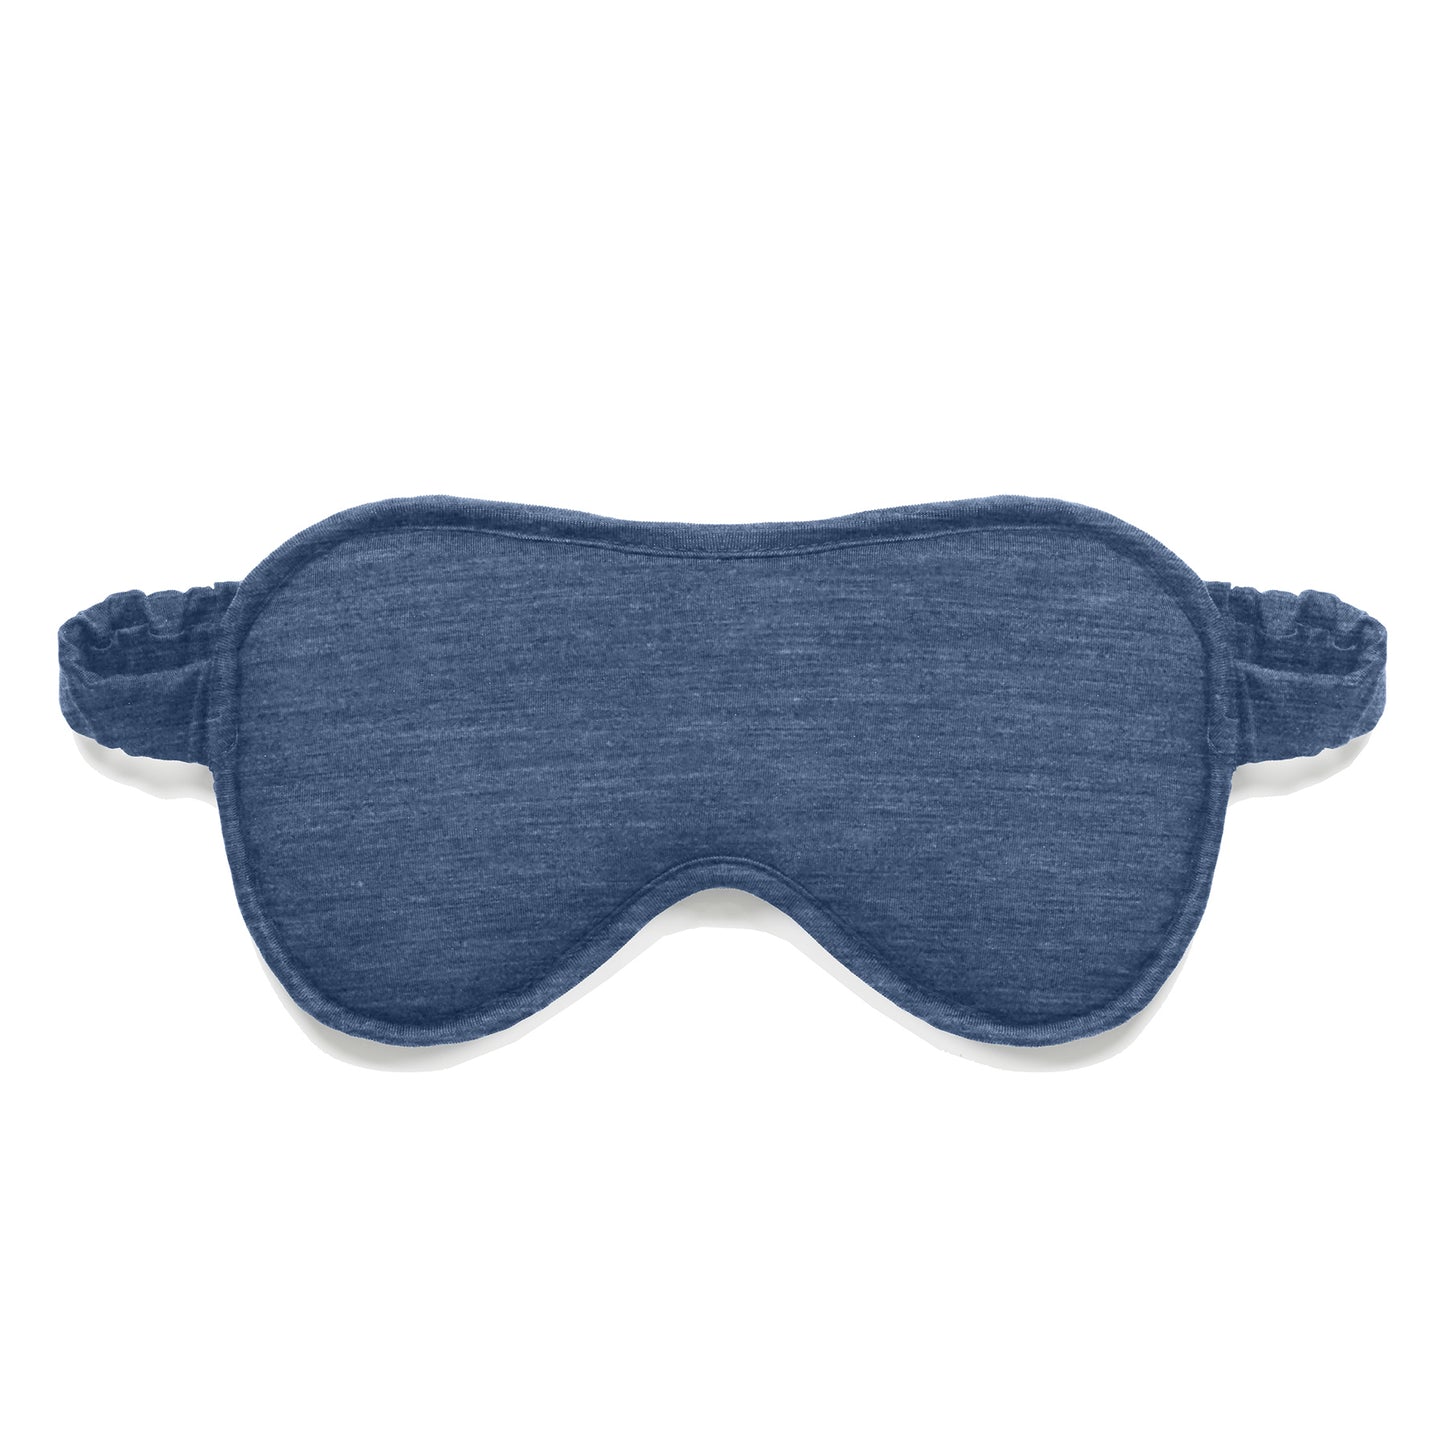 Merino sleep mask || Blue melange